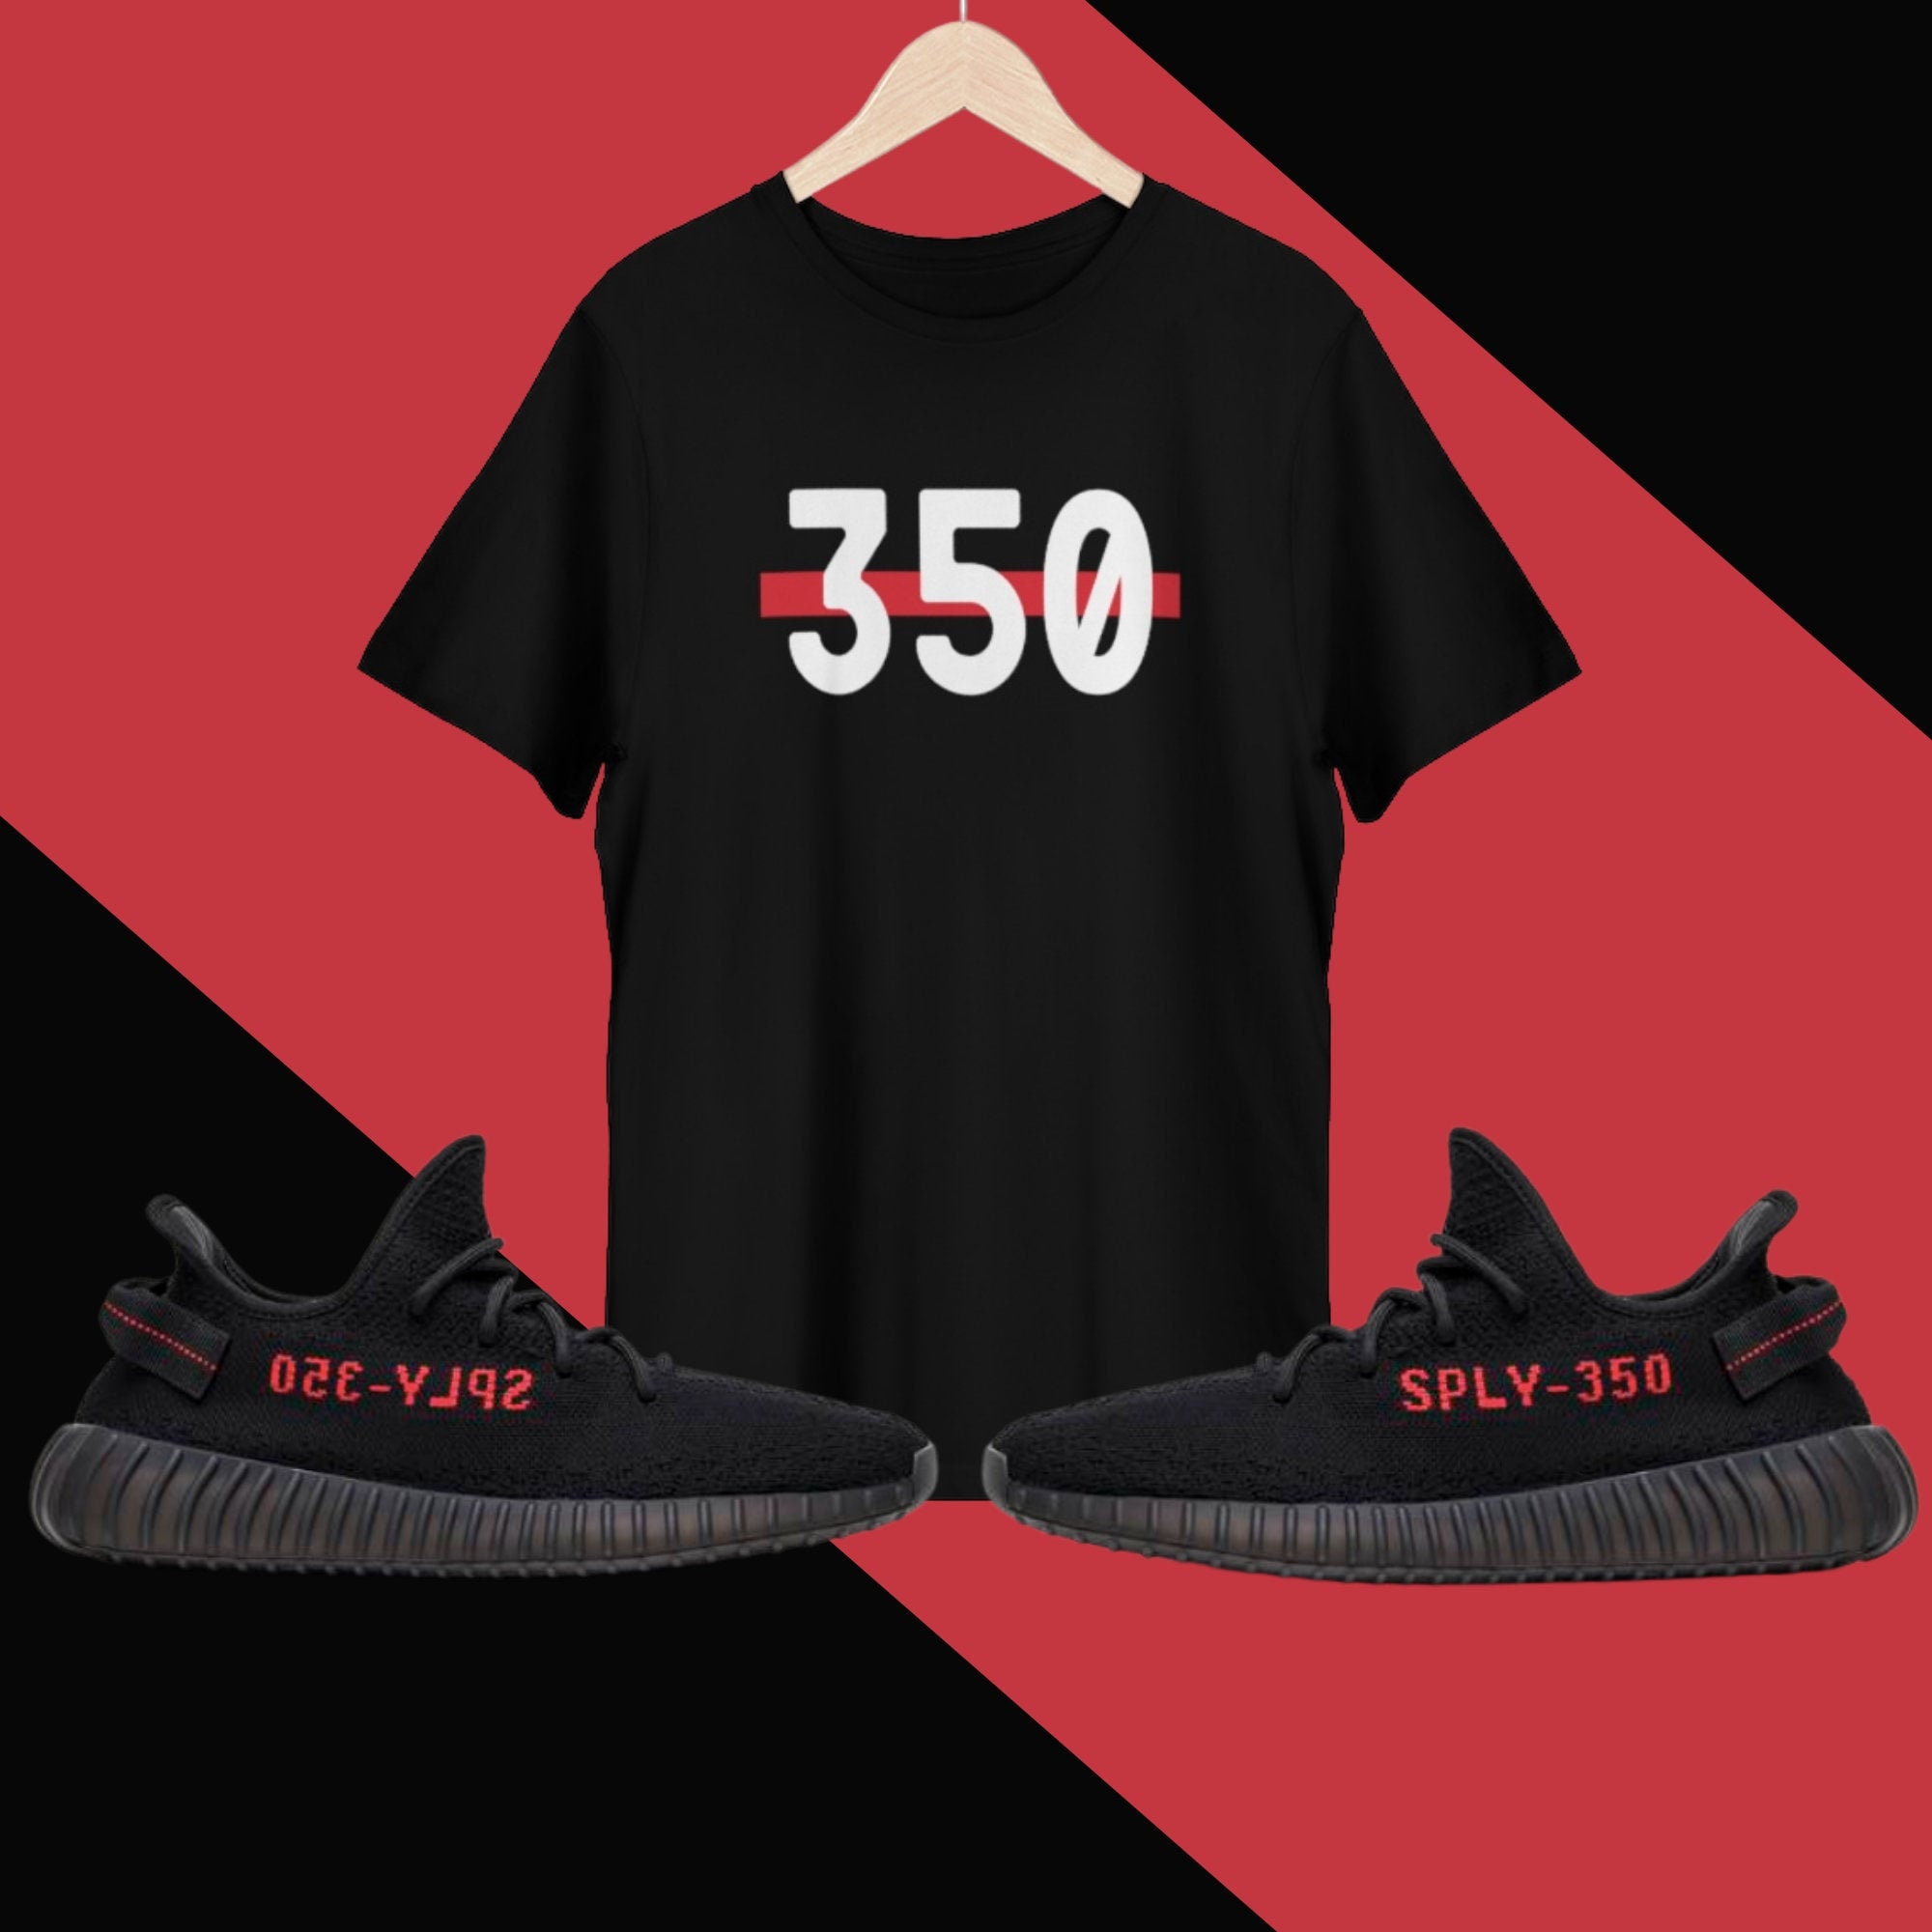 Yeezy Boost 350 V2 Black Red Unisex T-Shirt Match Shirt To | Etsy